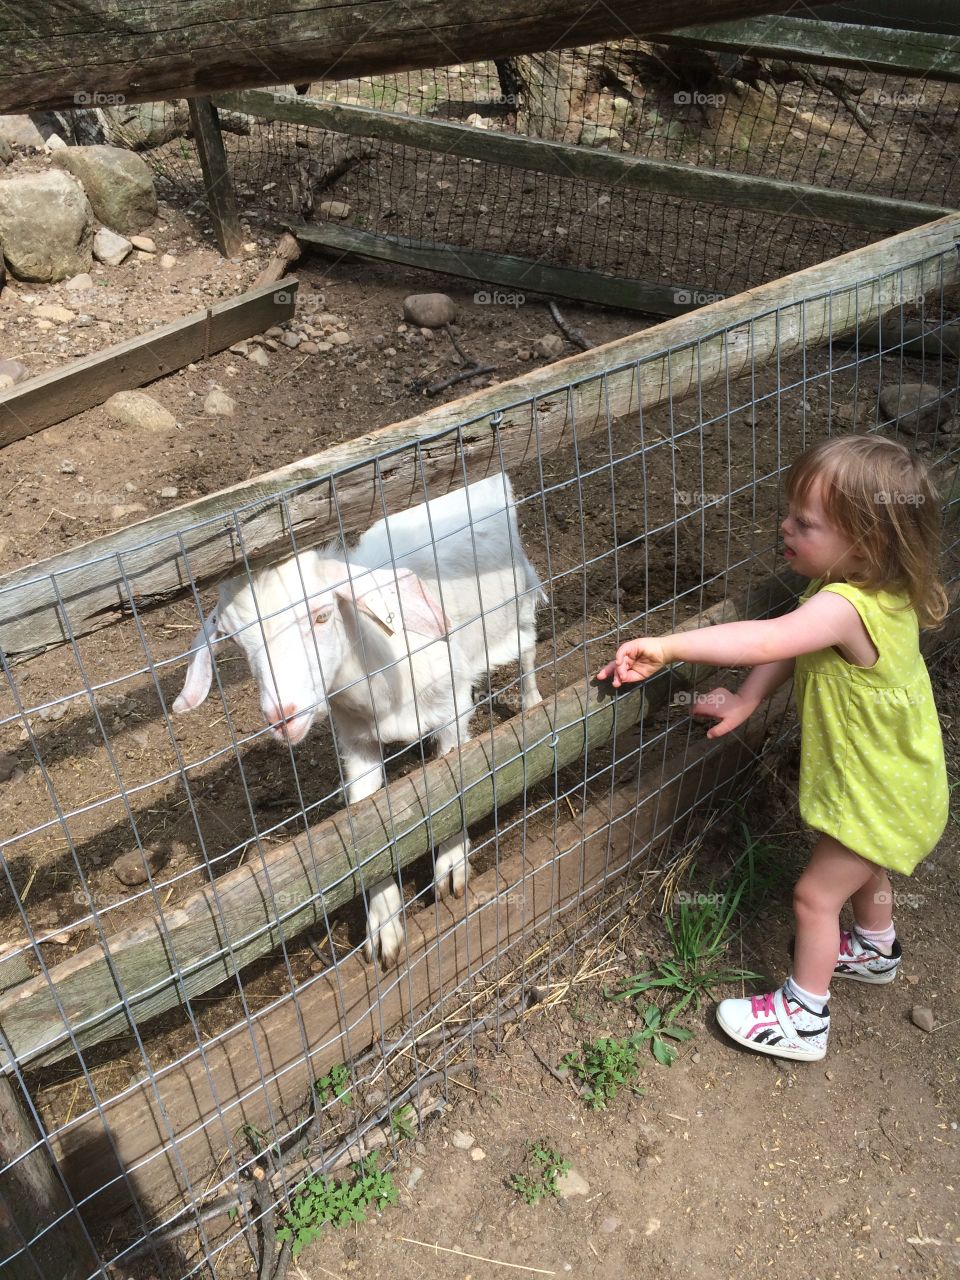 Goat, farm, Down syndrome